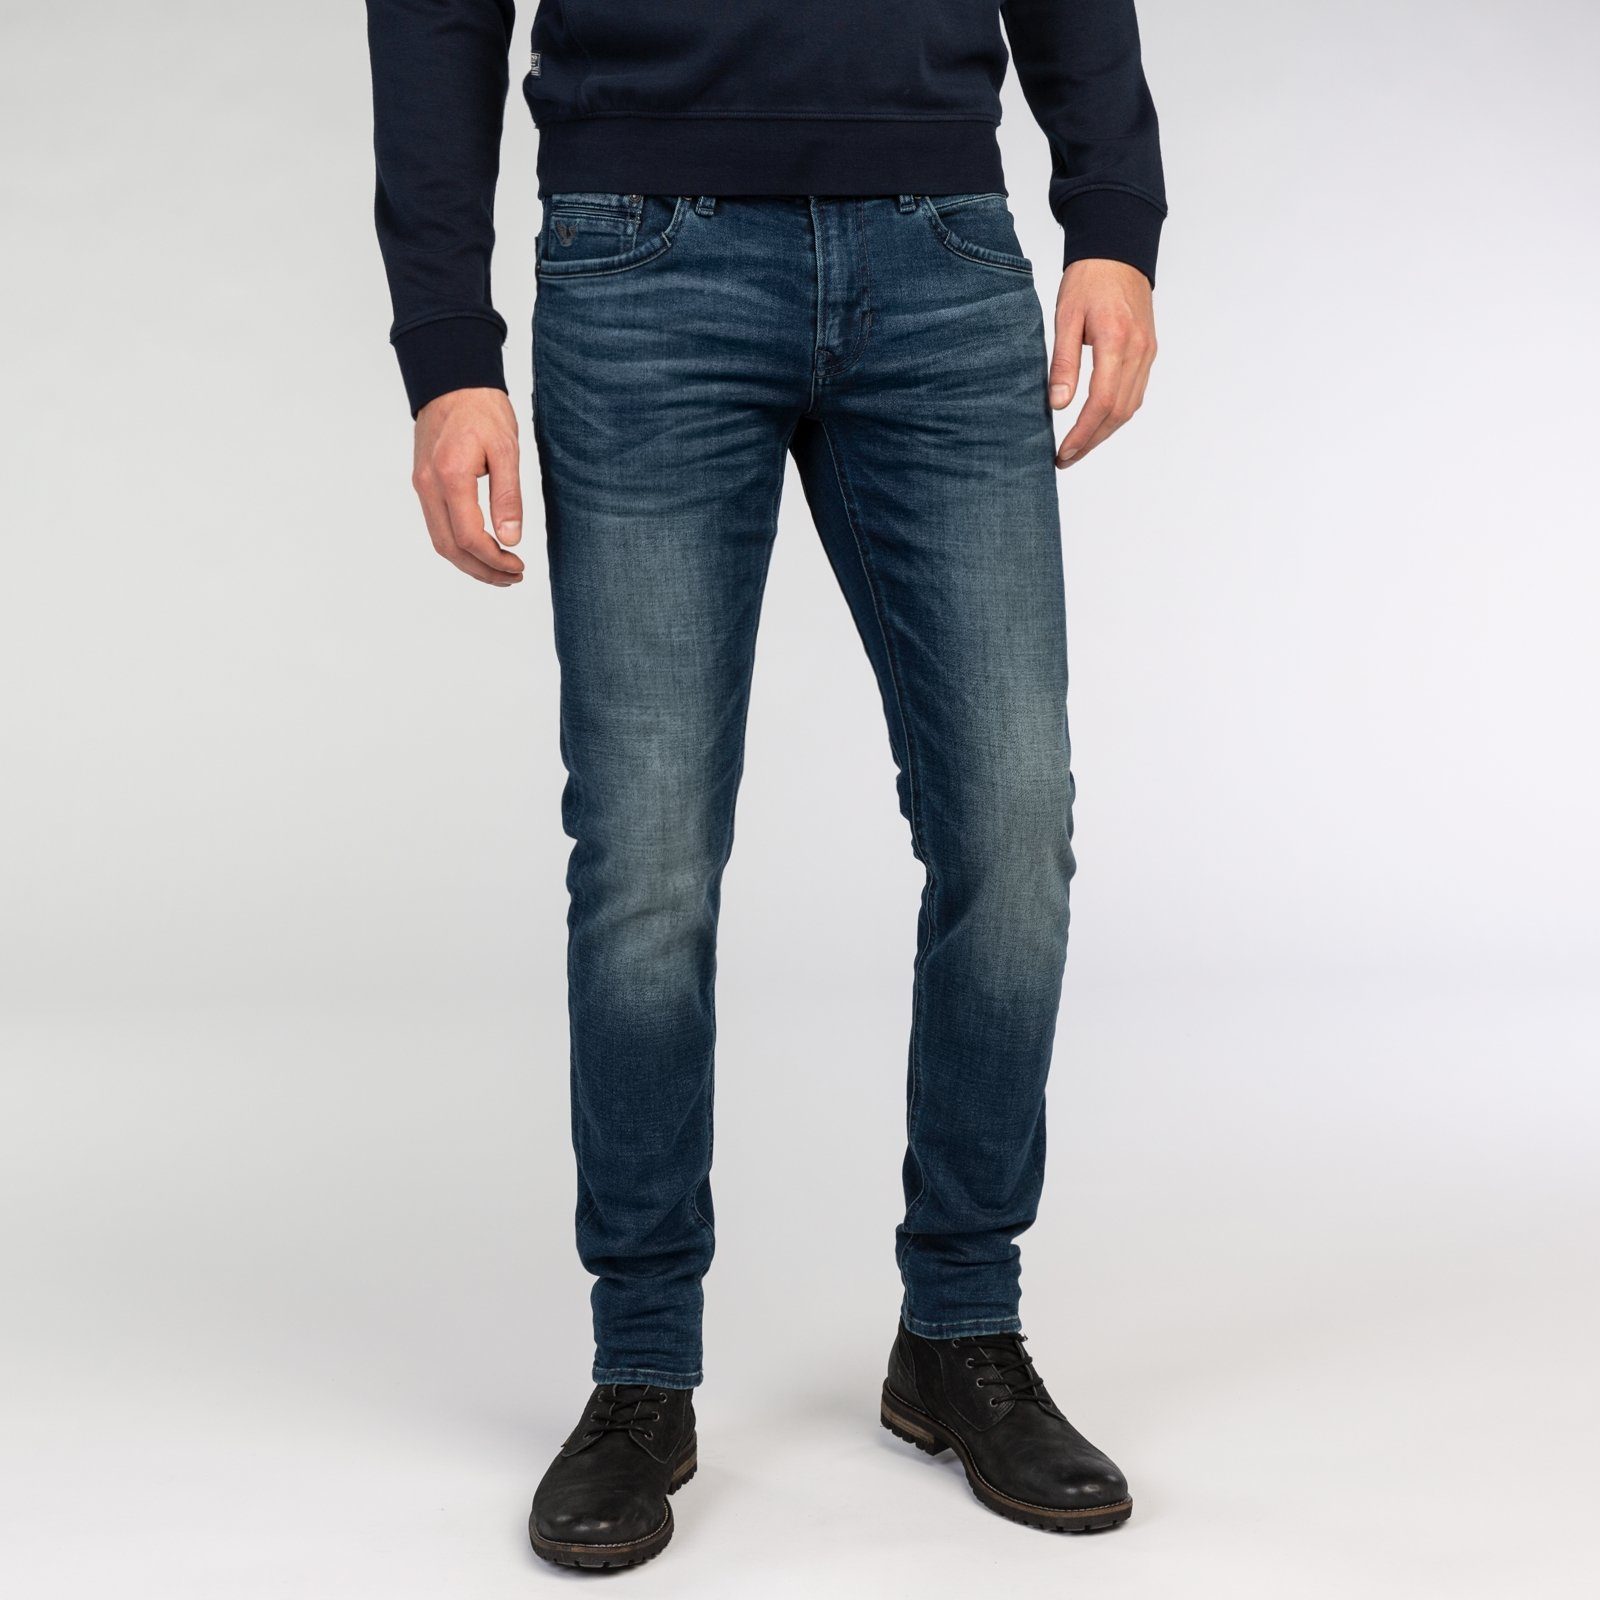 INDIGO DARK LEGEND PME TAILWHEEL blau BLUE 5-Pocket-Jeans